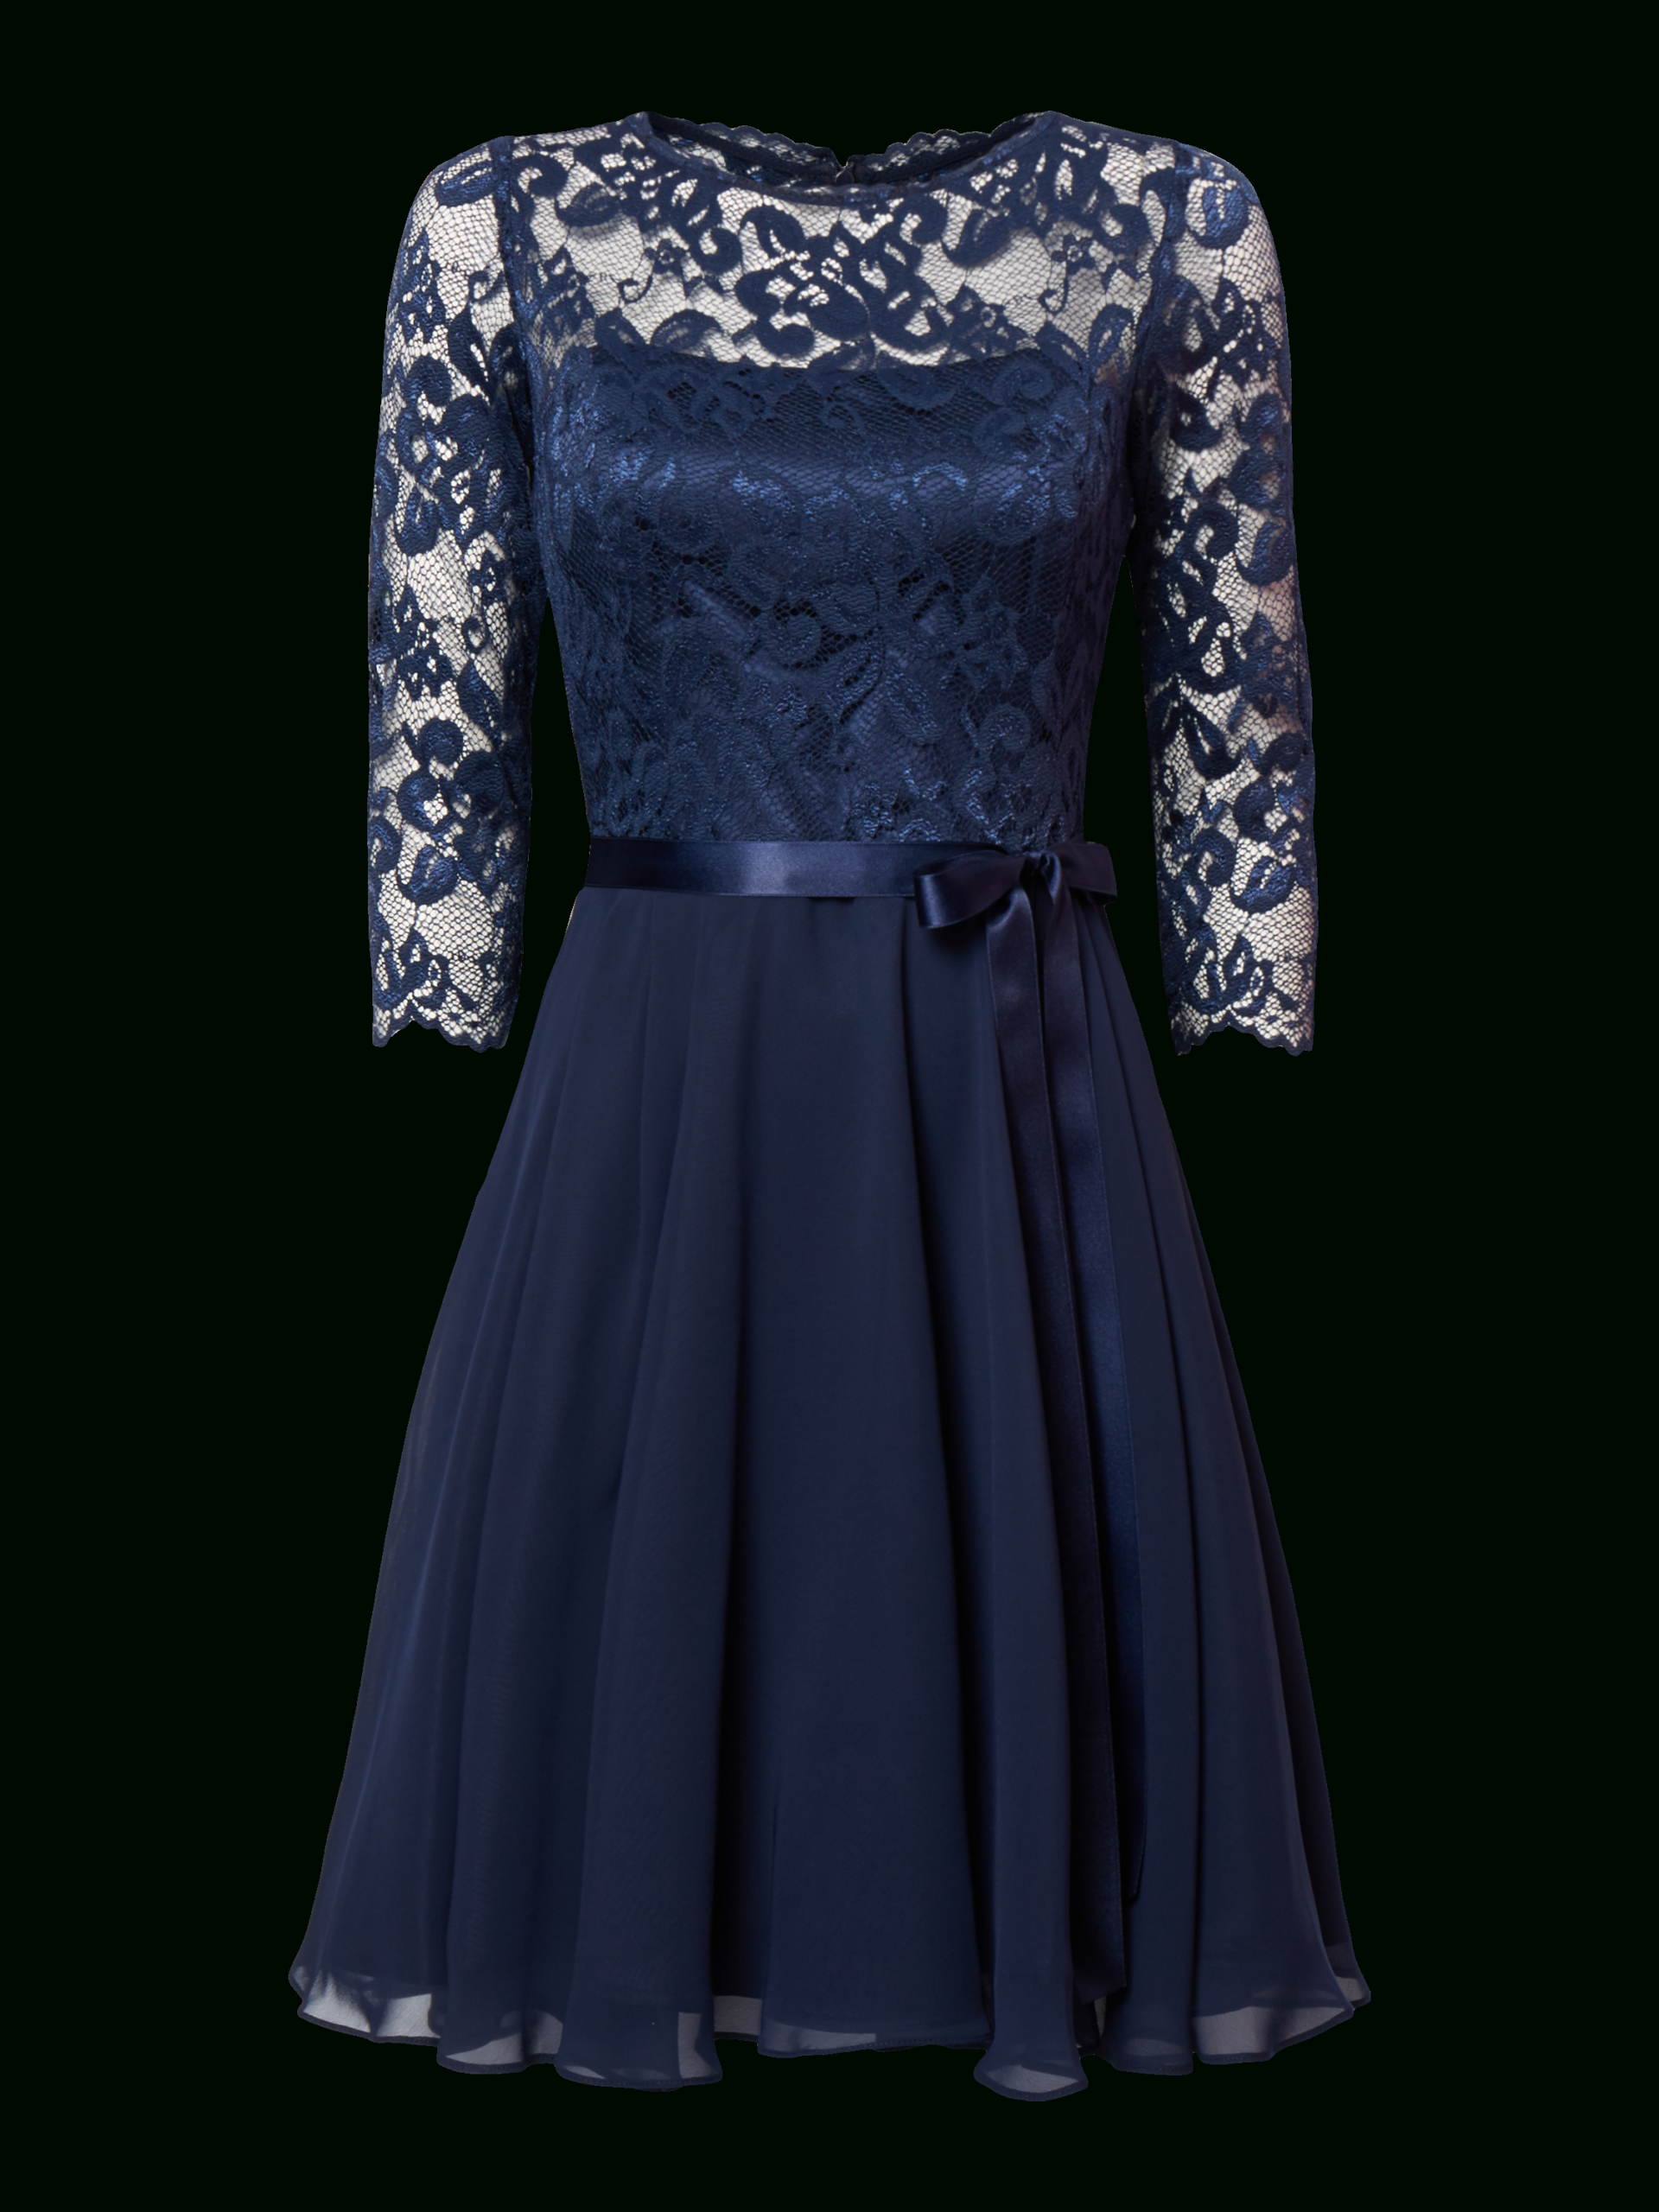 10 Genial Blaues Kleid Spitze BoutiqueDesigner Luxurius Blaues Kleid Spitze Bester Preis